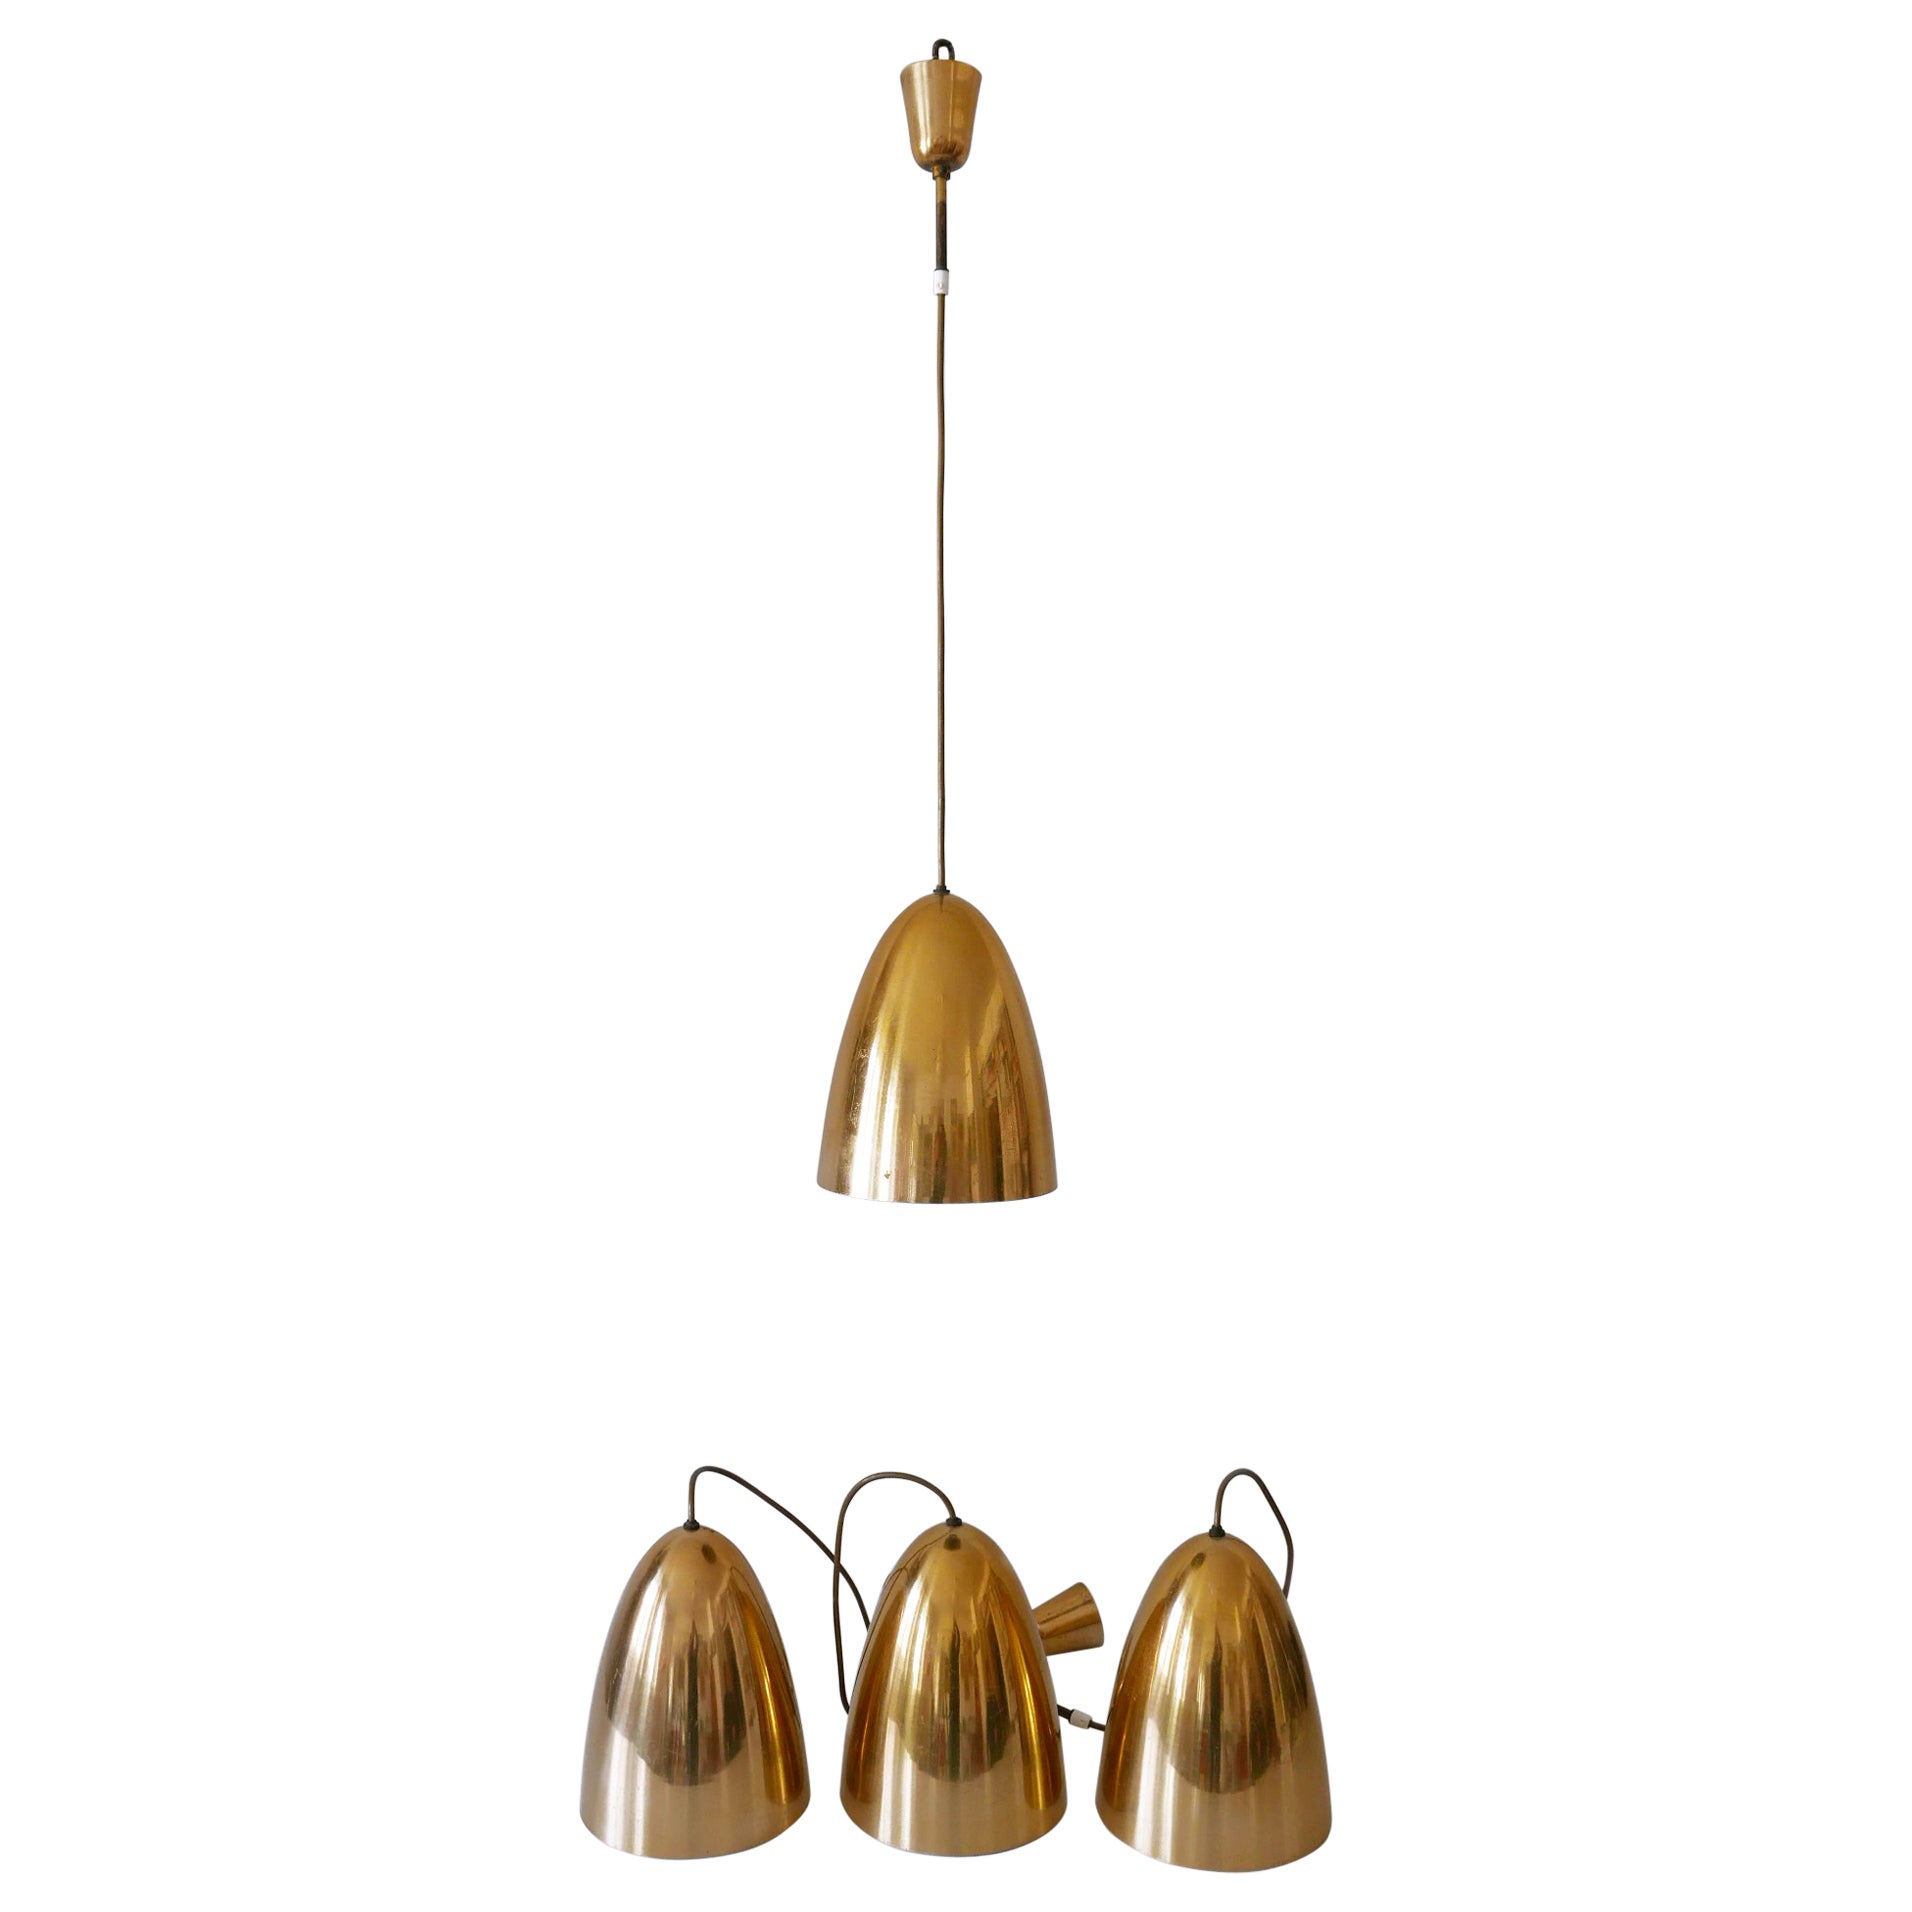 1 of 4 Elegant Mid Century Modern Pendant Lamps or Hanging Lights Germany 1950s